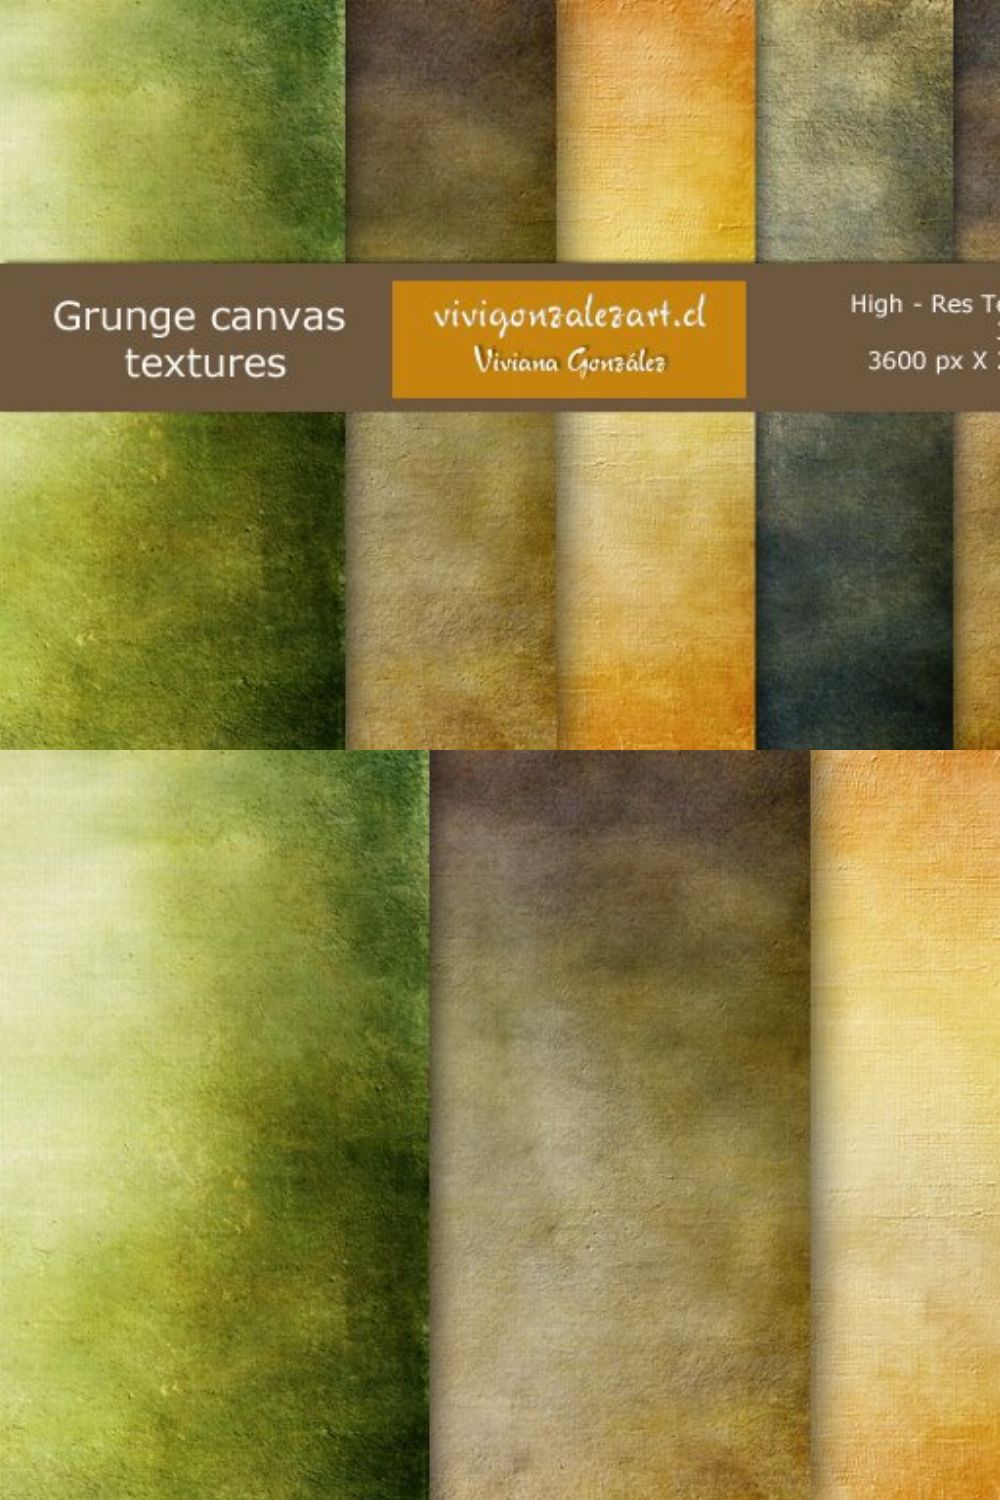 Grunge canvas textures pinterest preview image.